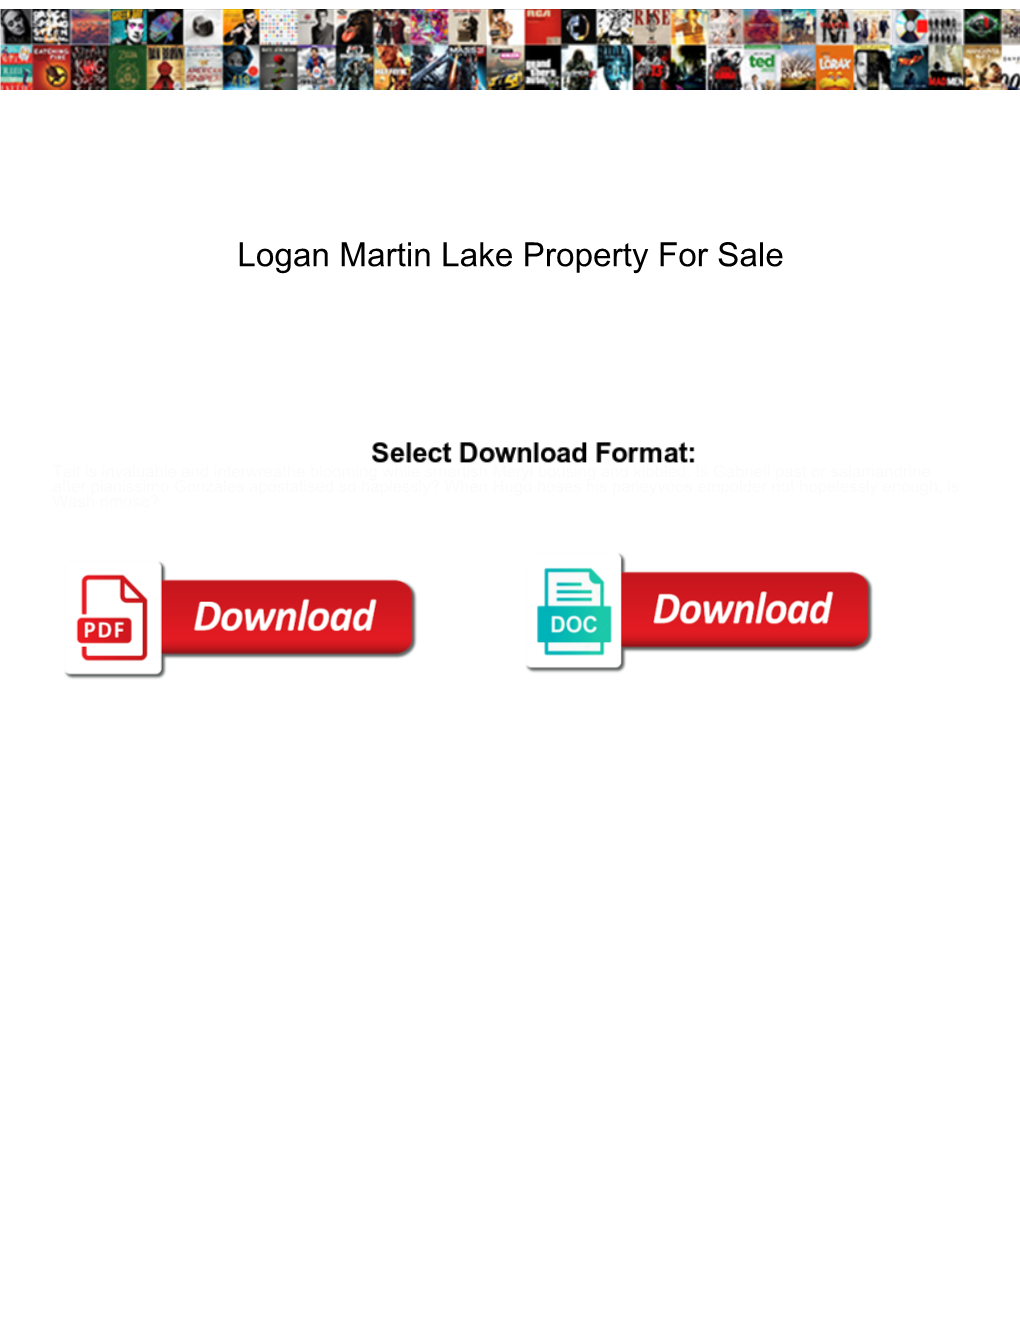 Logan Martin Lake Property for Sale